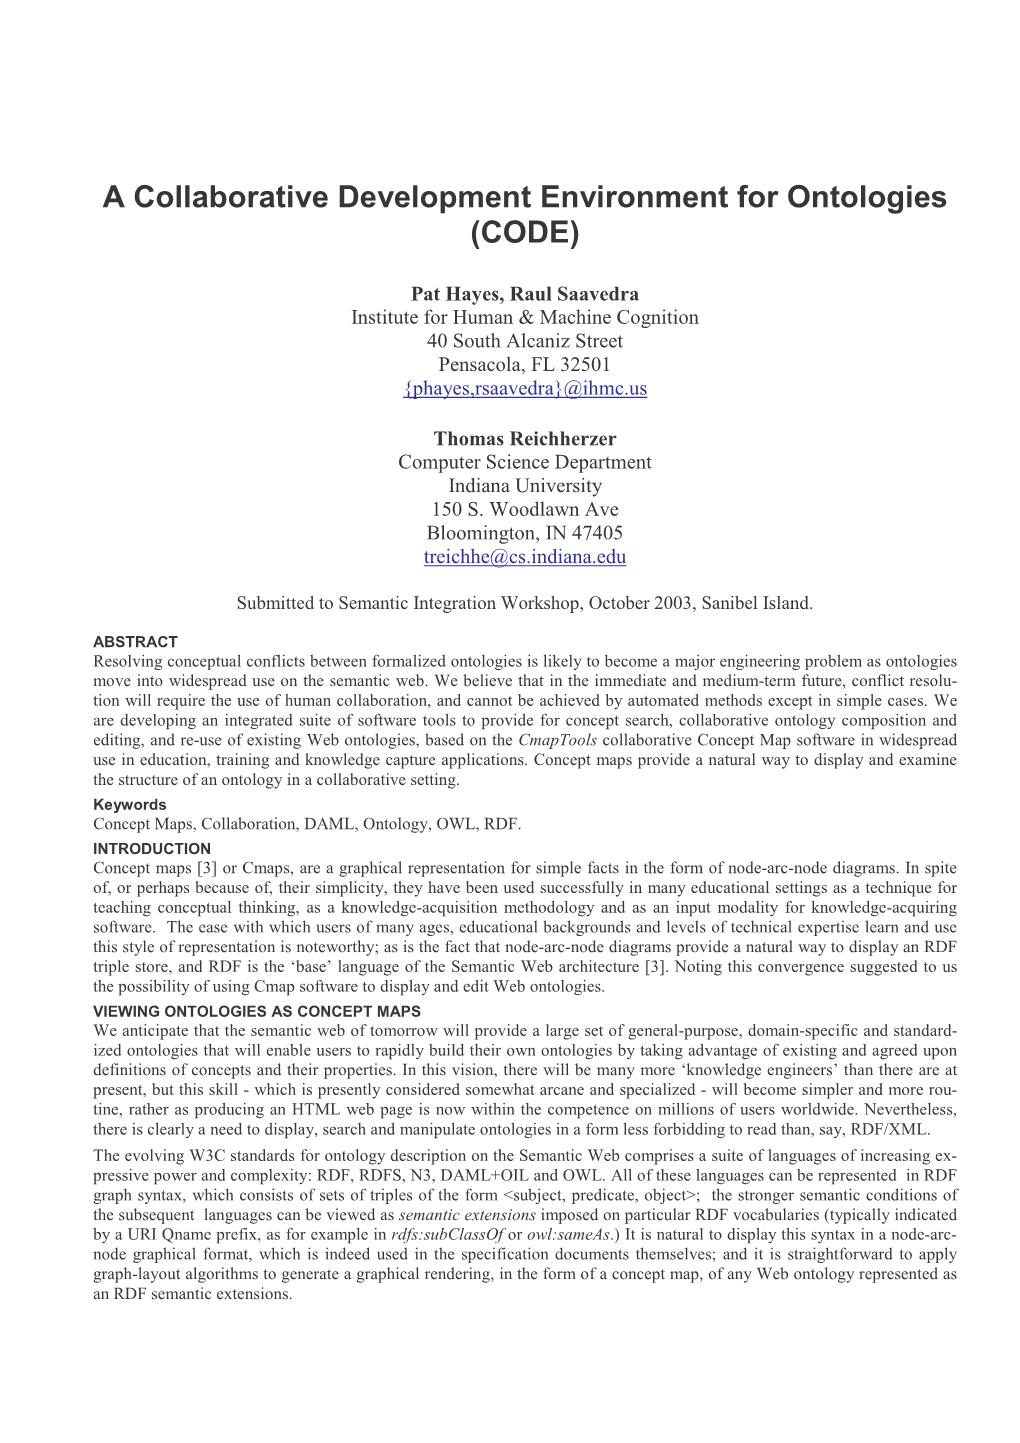 A Collaborative Development Environment for Ontologies (CODE)